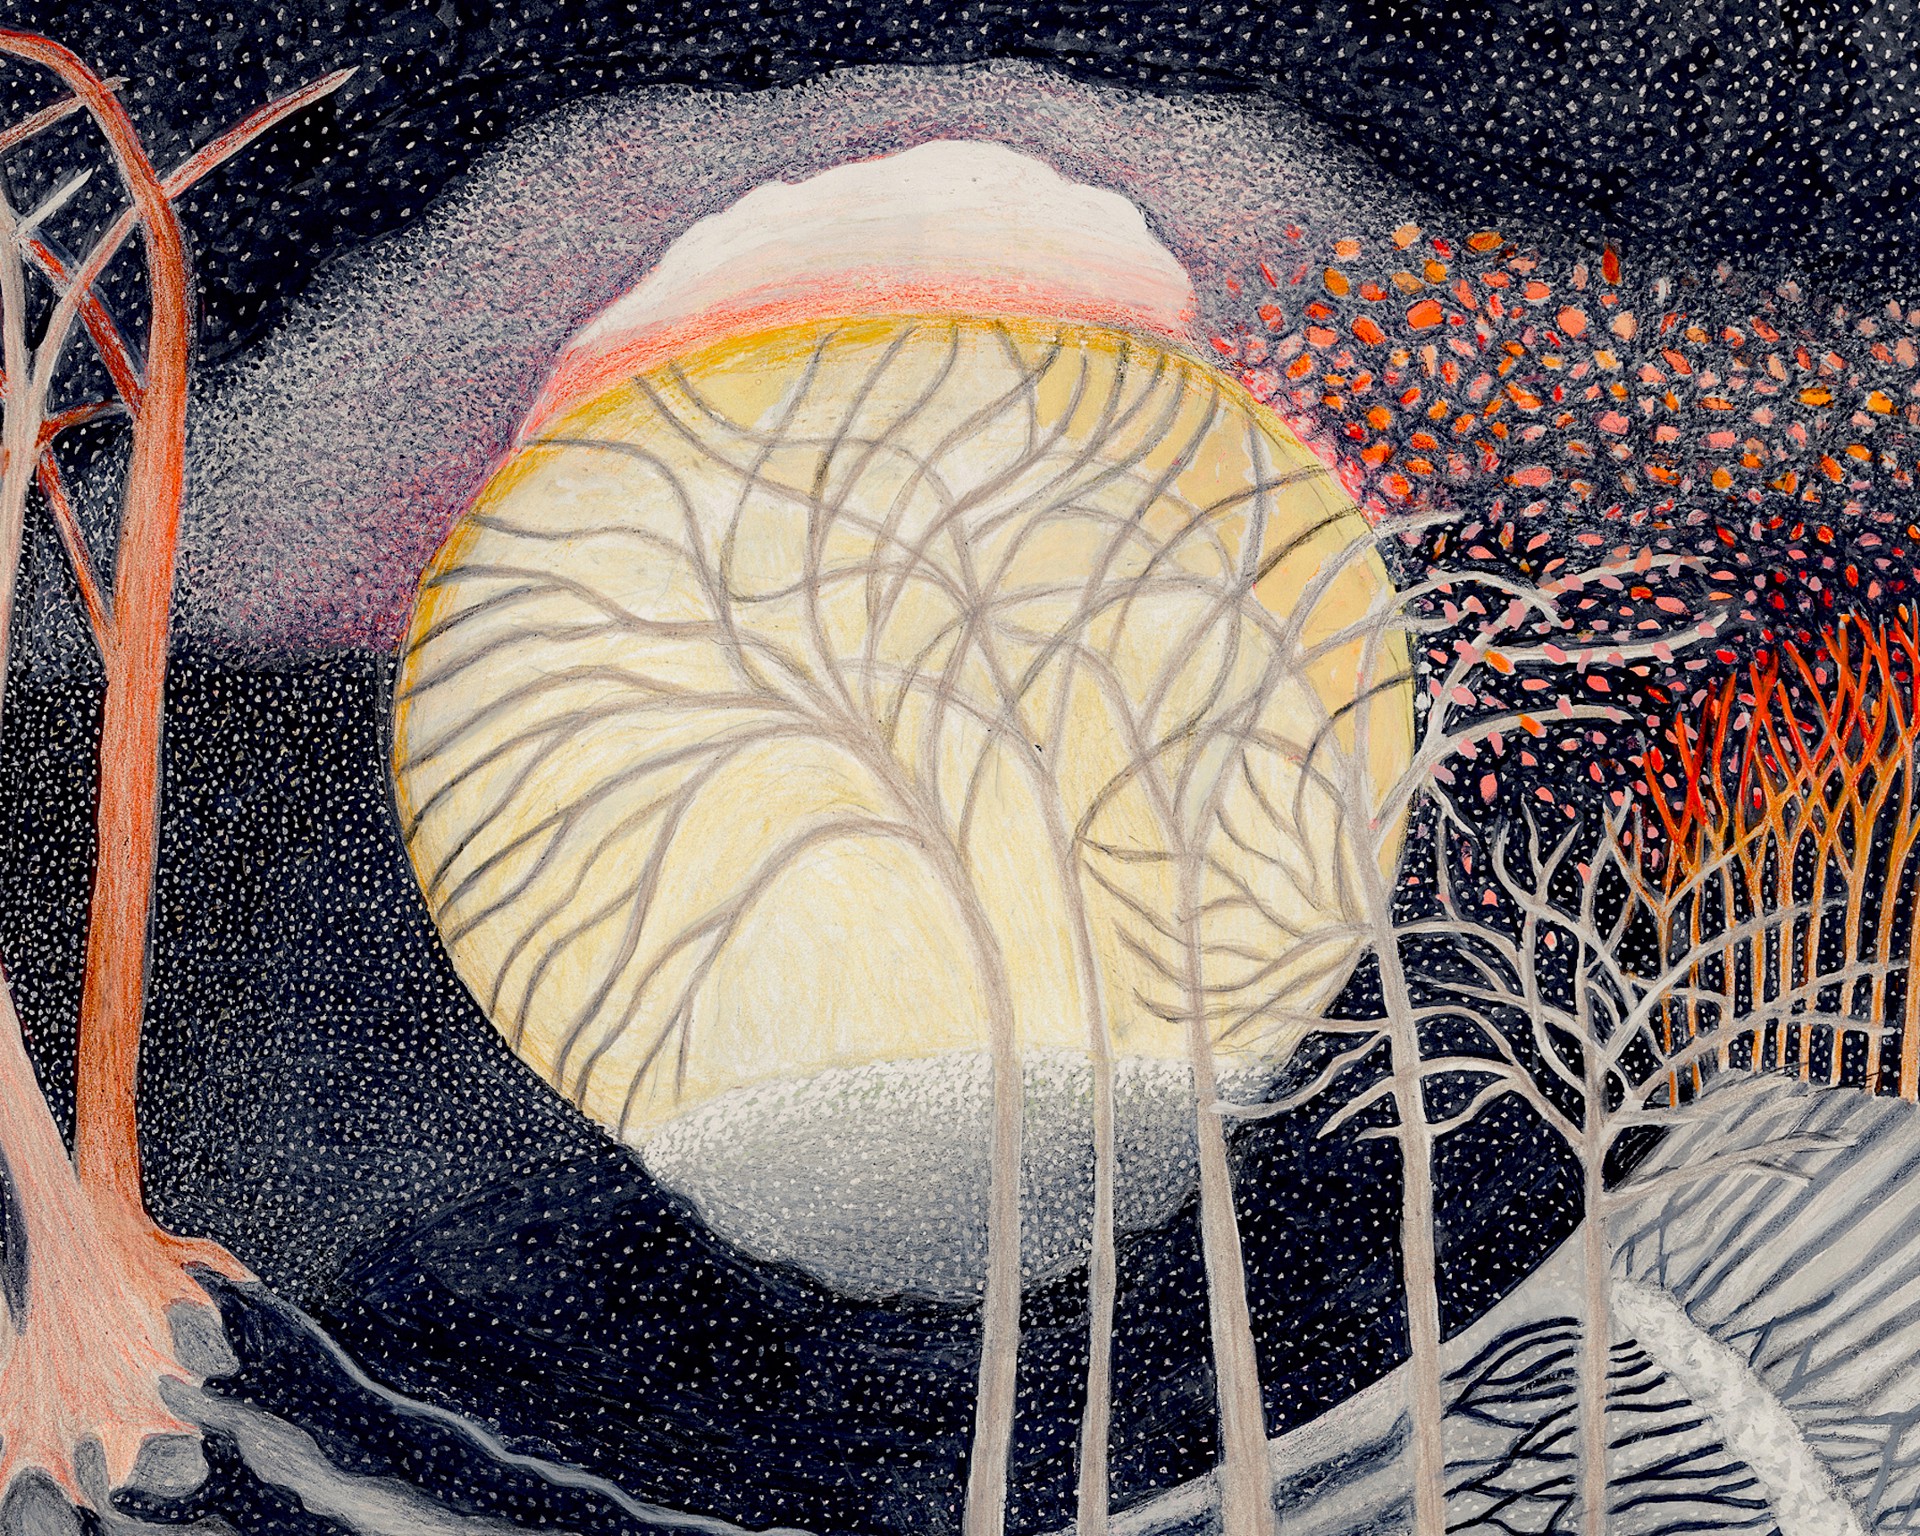 Five Moons and a Sun by Ann Leda Shapiro